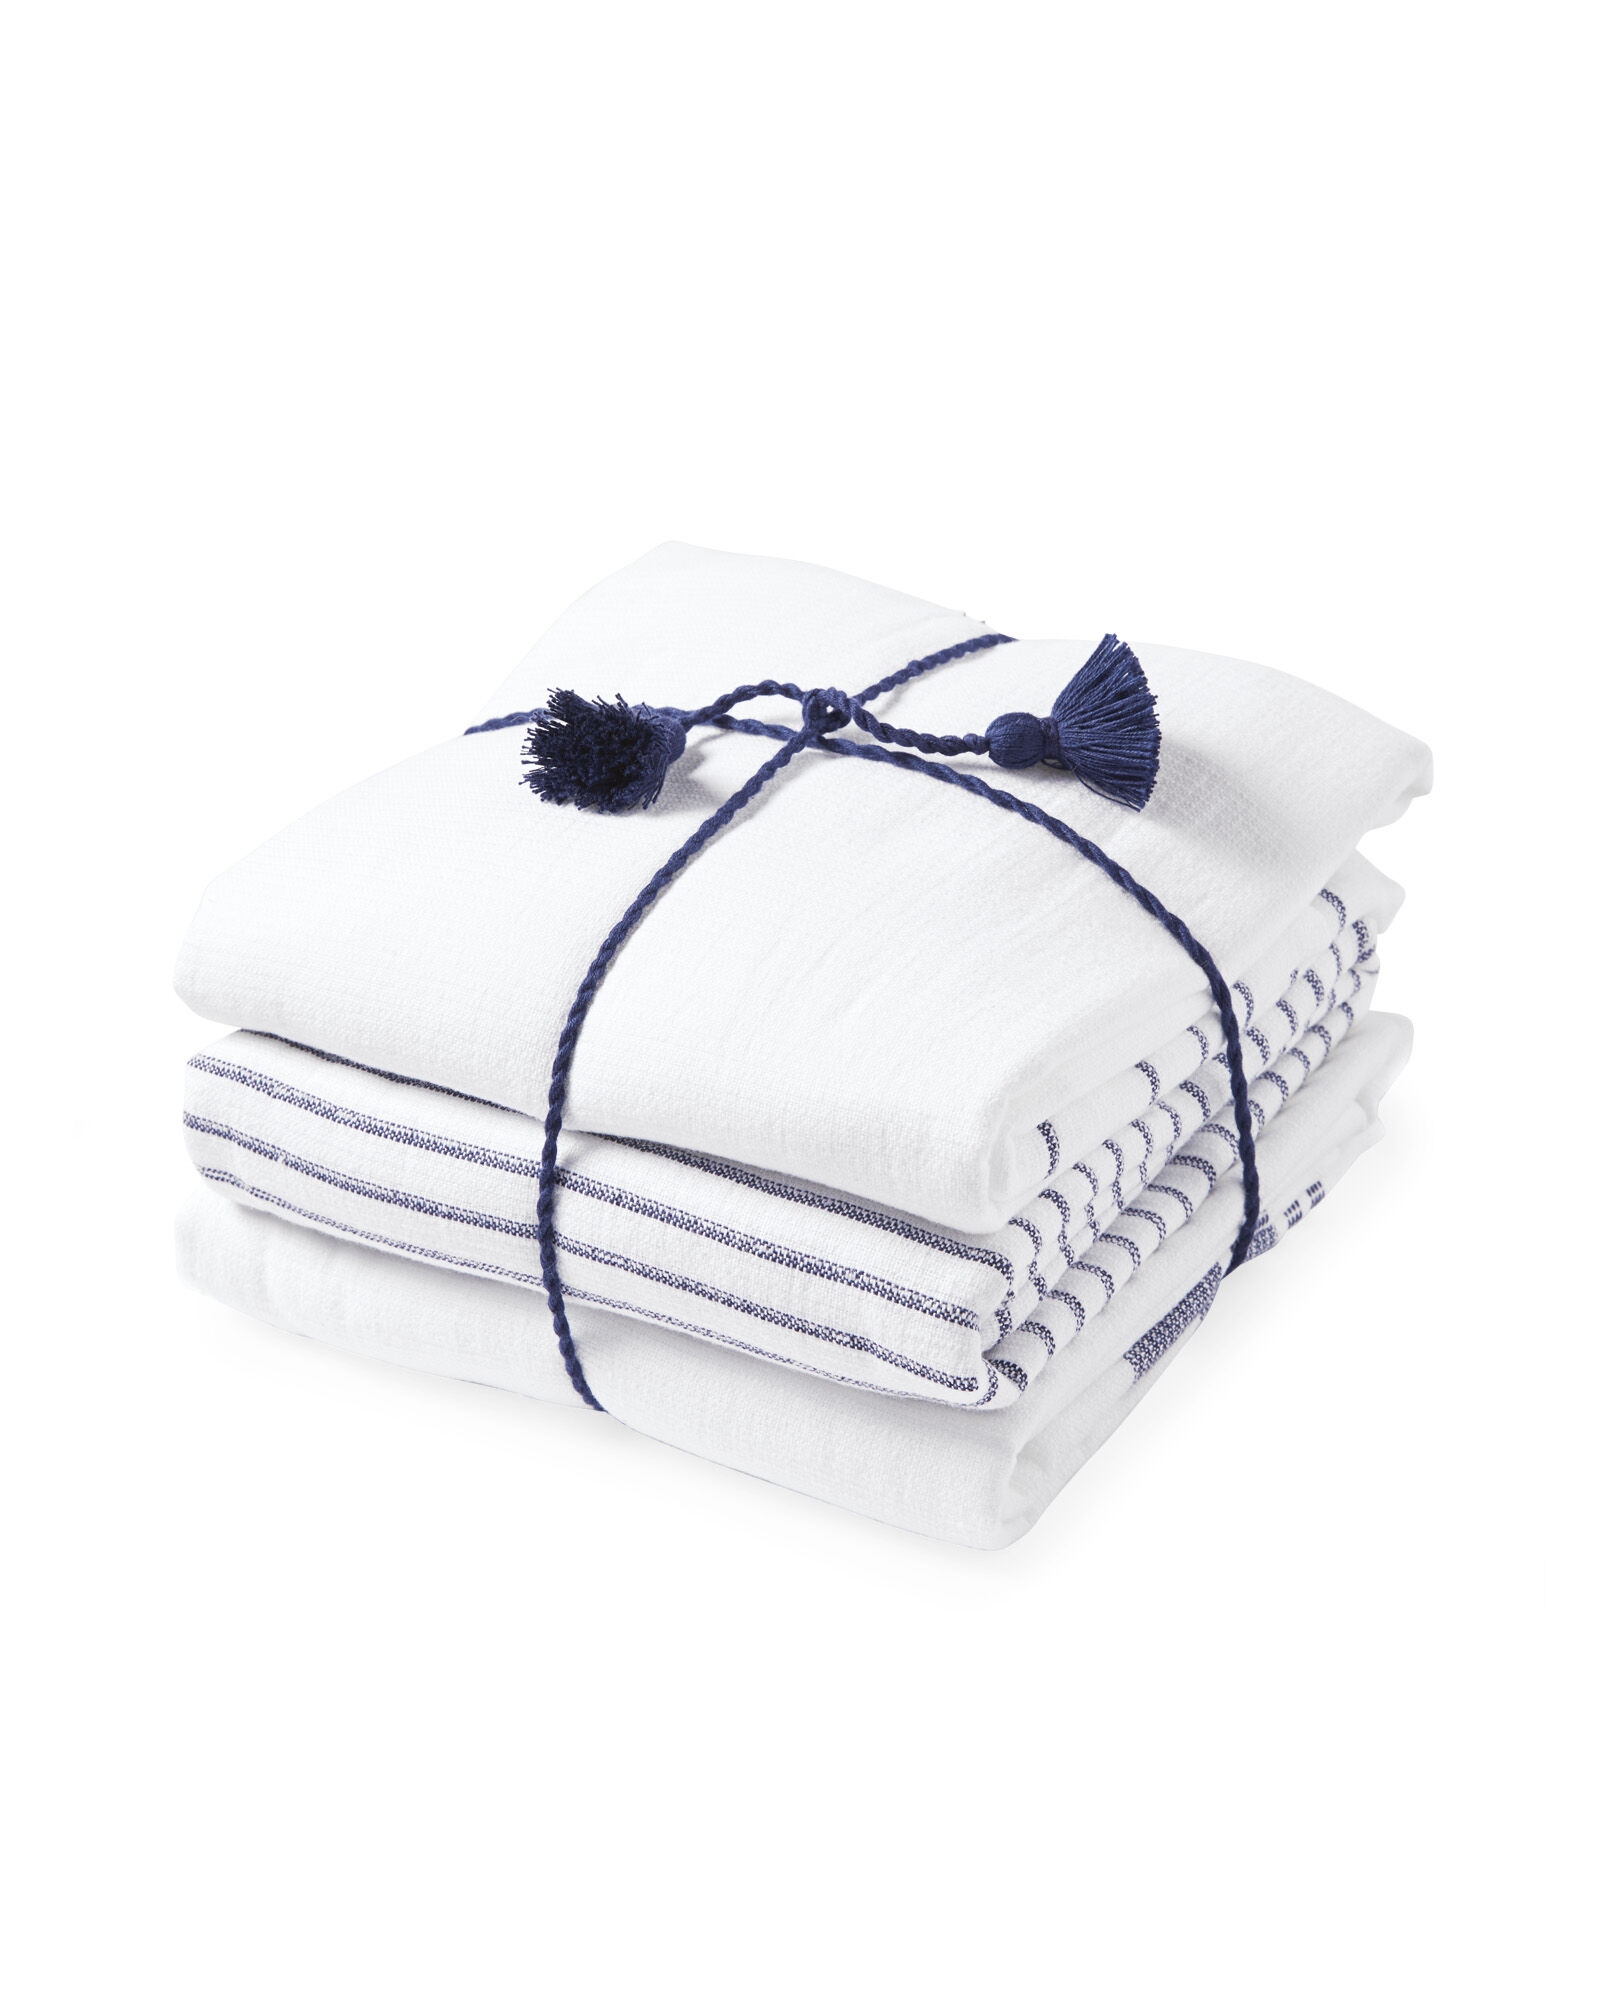 Bellport Guest Towels (Set of 3) - Image 1